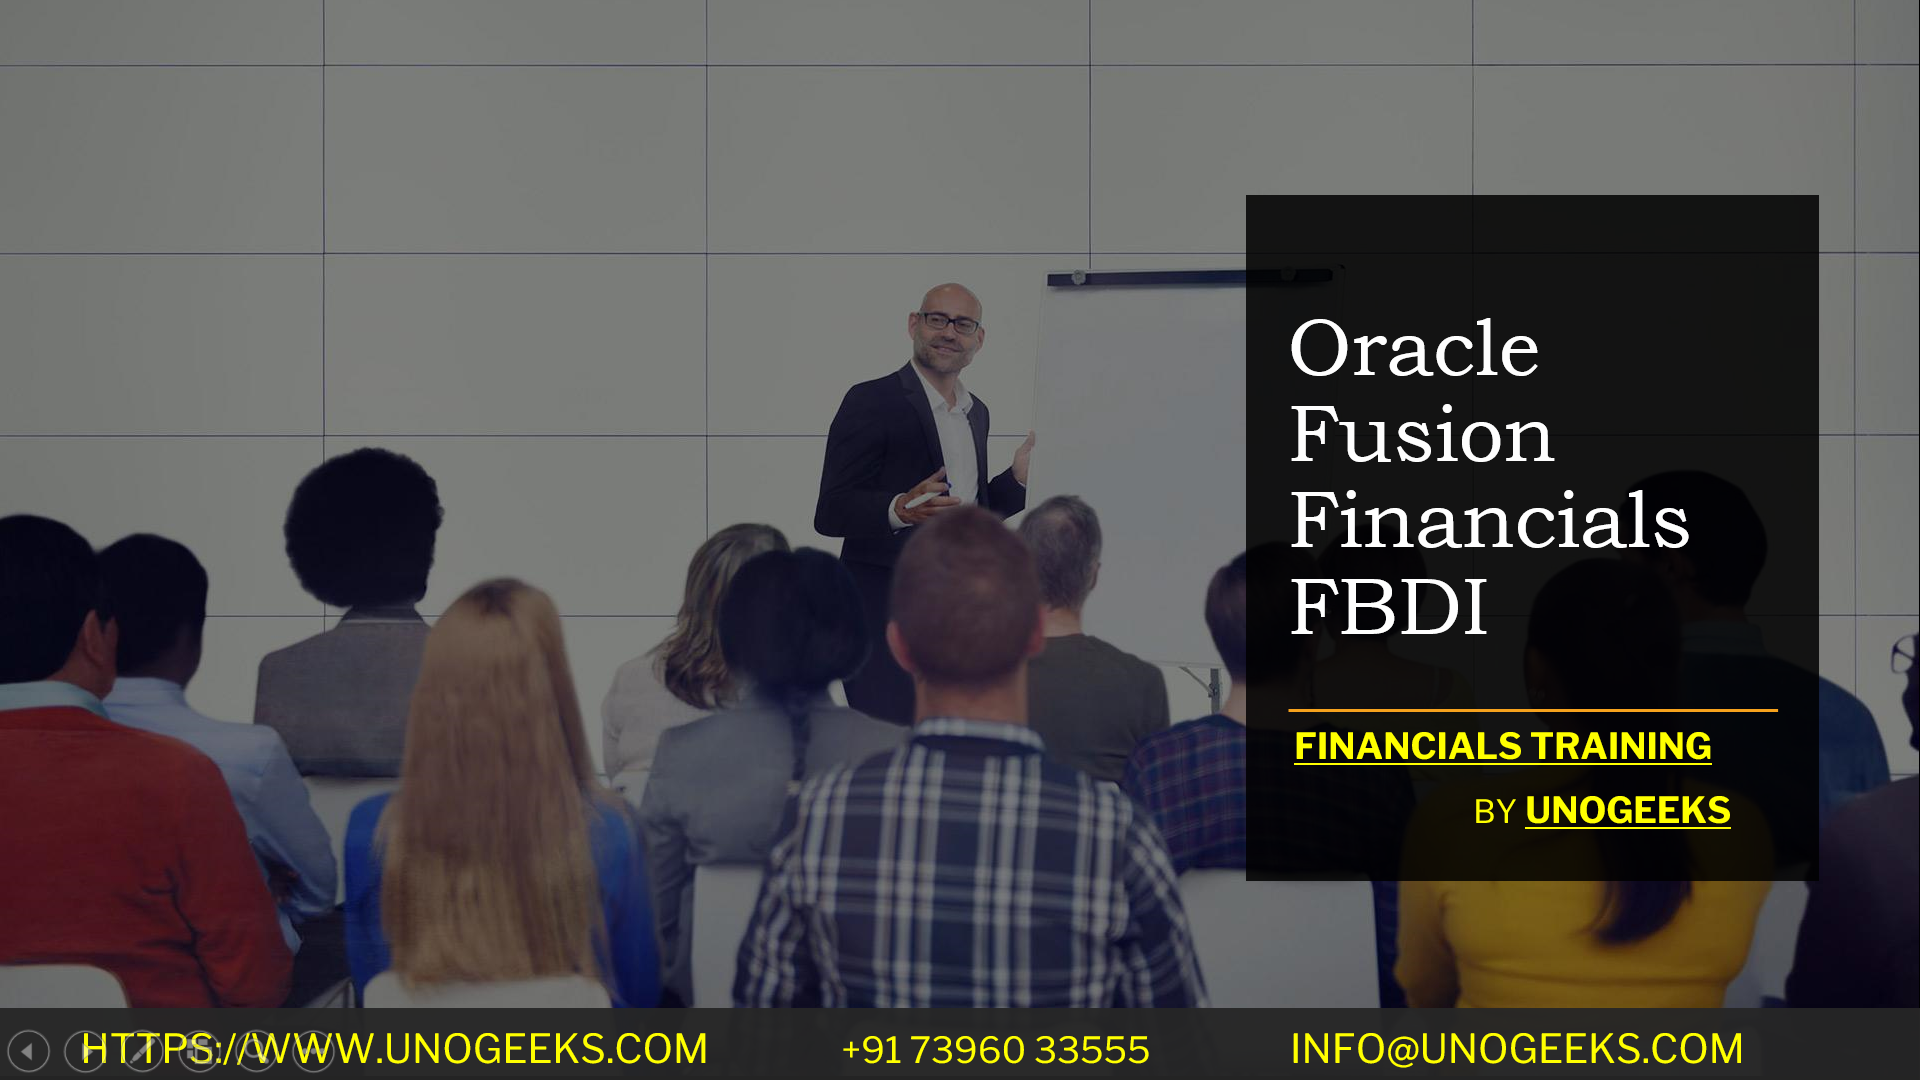 Oracle Fusion Financials FBDI